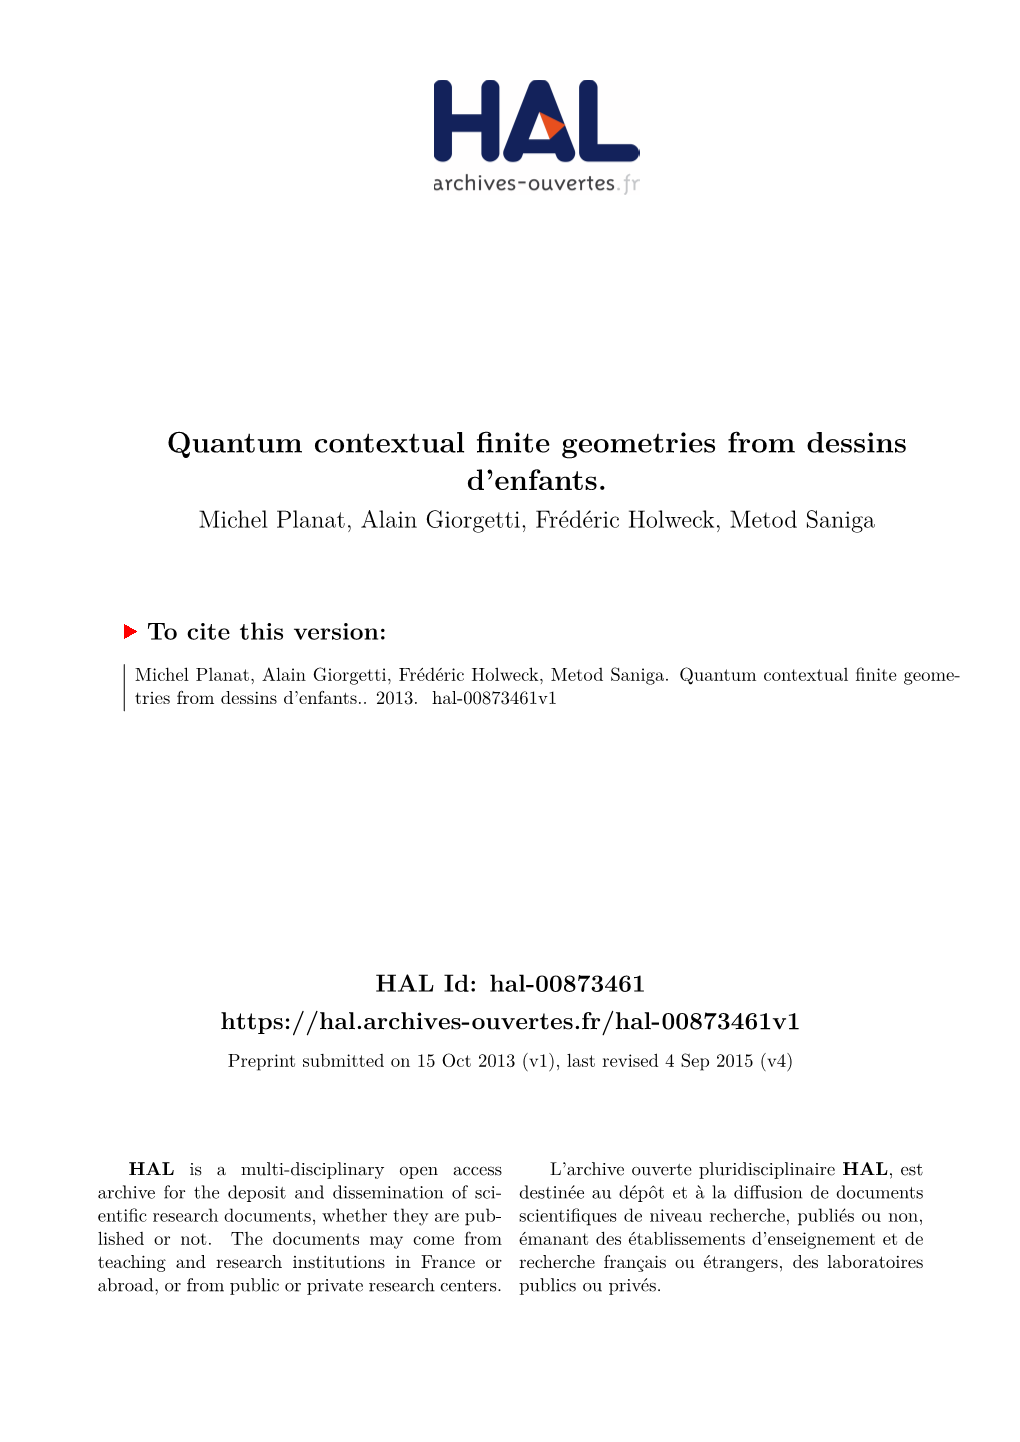 Quantum Contextual Finite Geometries from Dessins D’Enfants